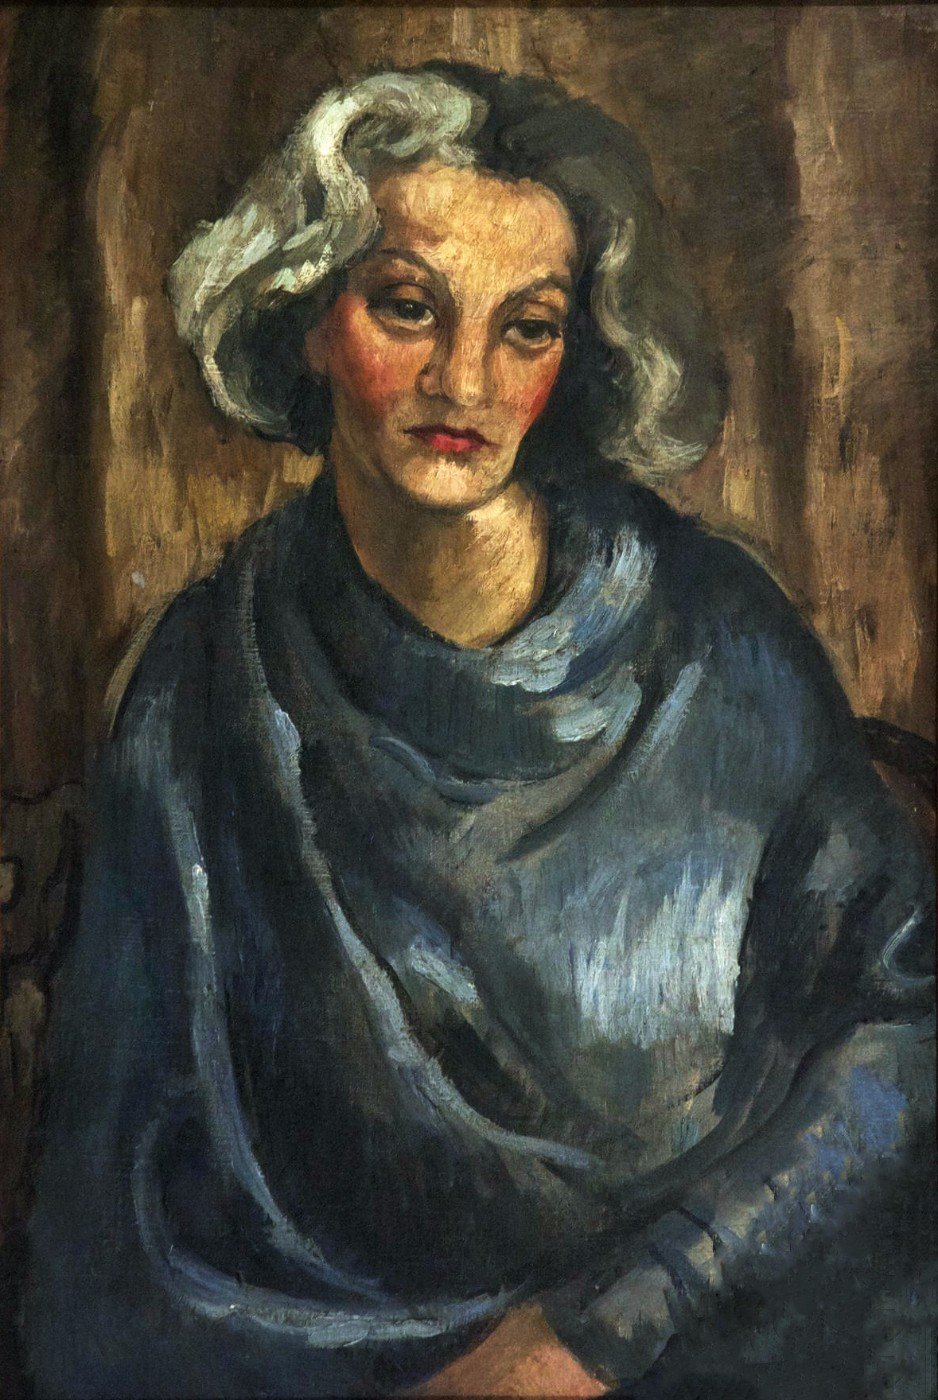 مدام تاتشليتسكي by Amrita Sher-Gil - 1930 - 54 x 80cm 